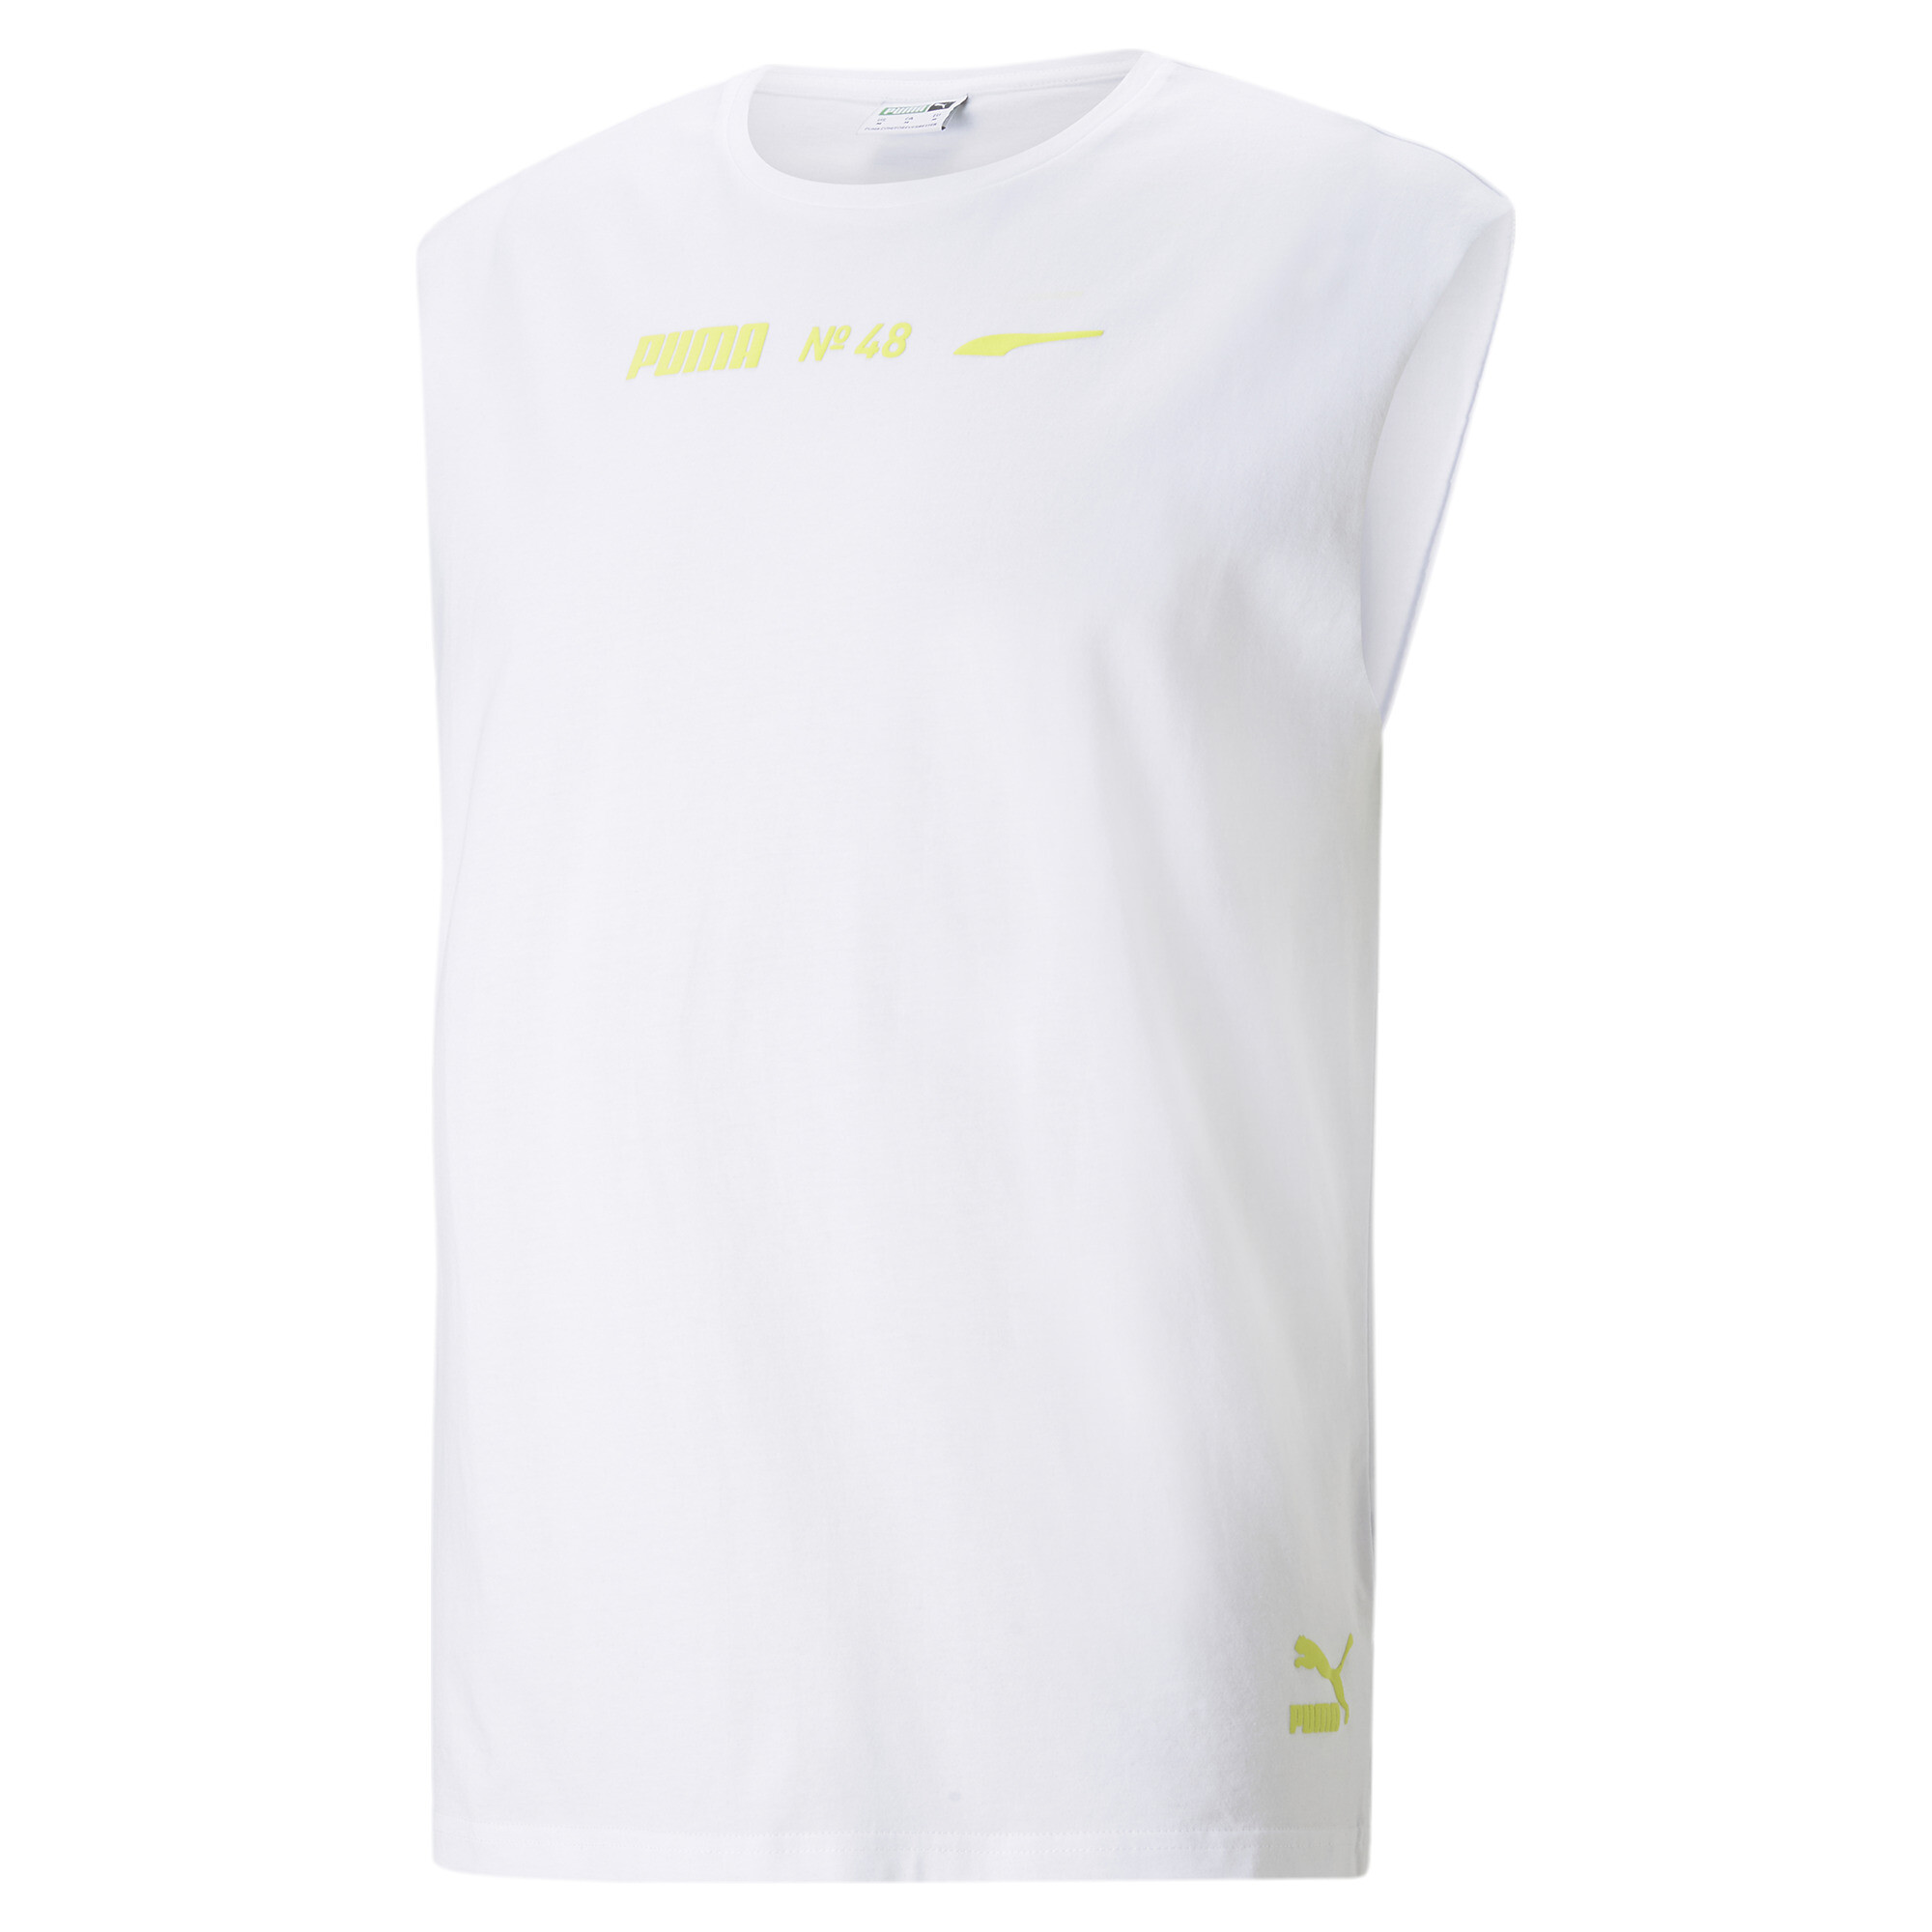 Men's Puma Statement Sleeveless's T-Shirt, White, Size M, Clothing